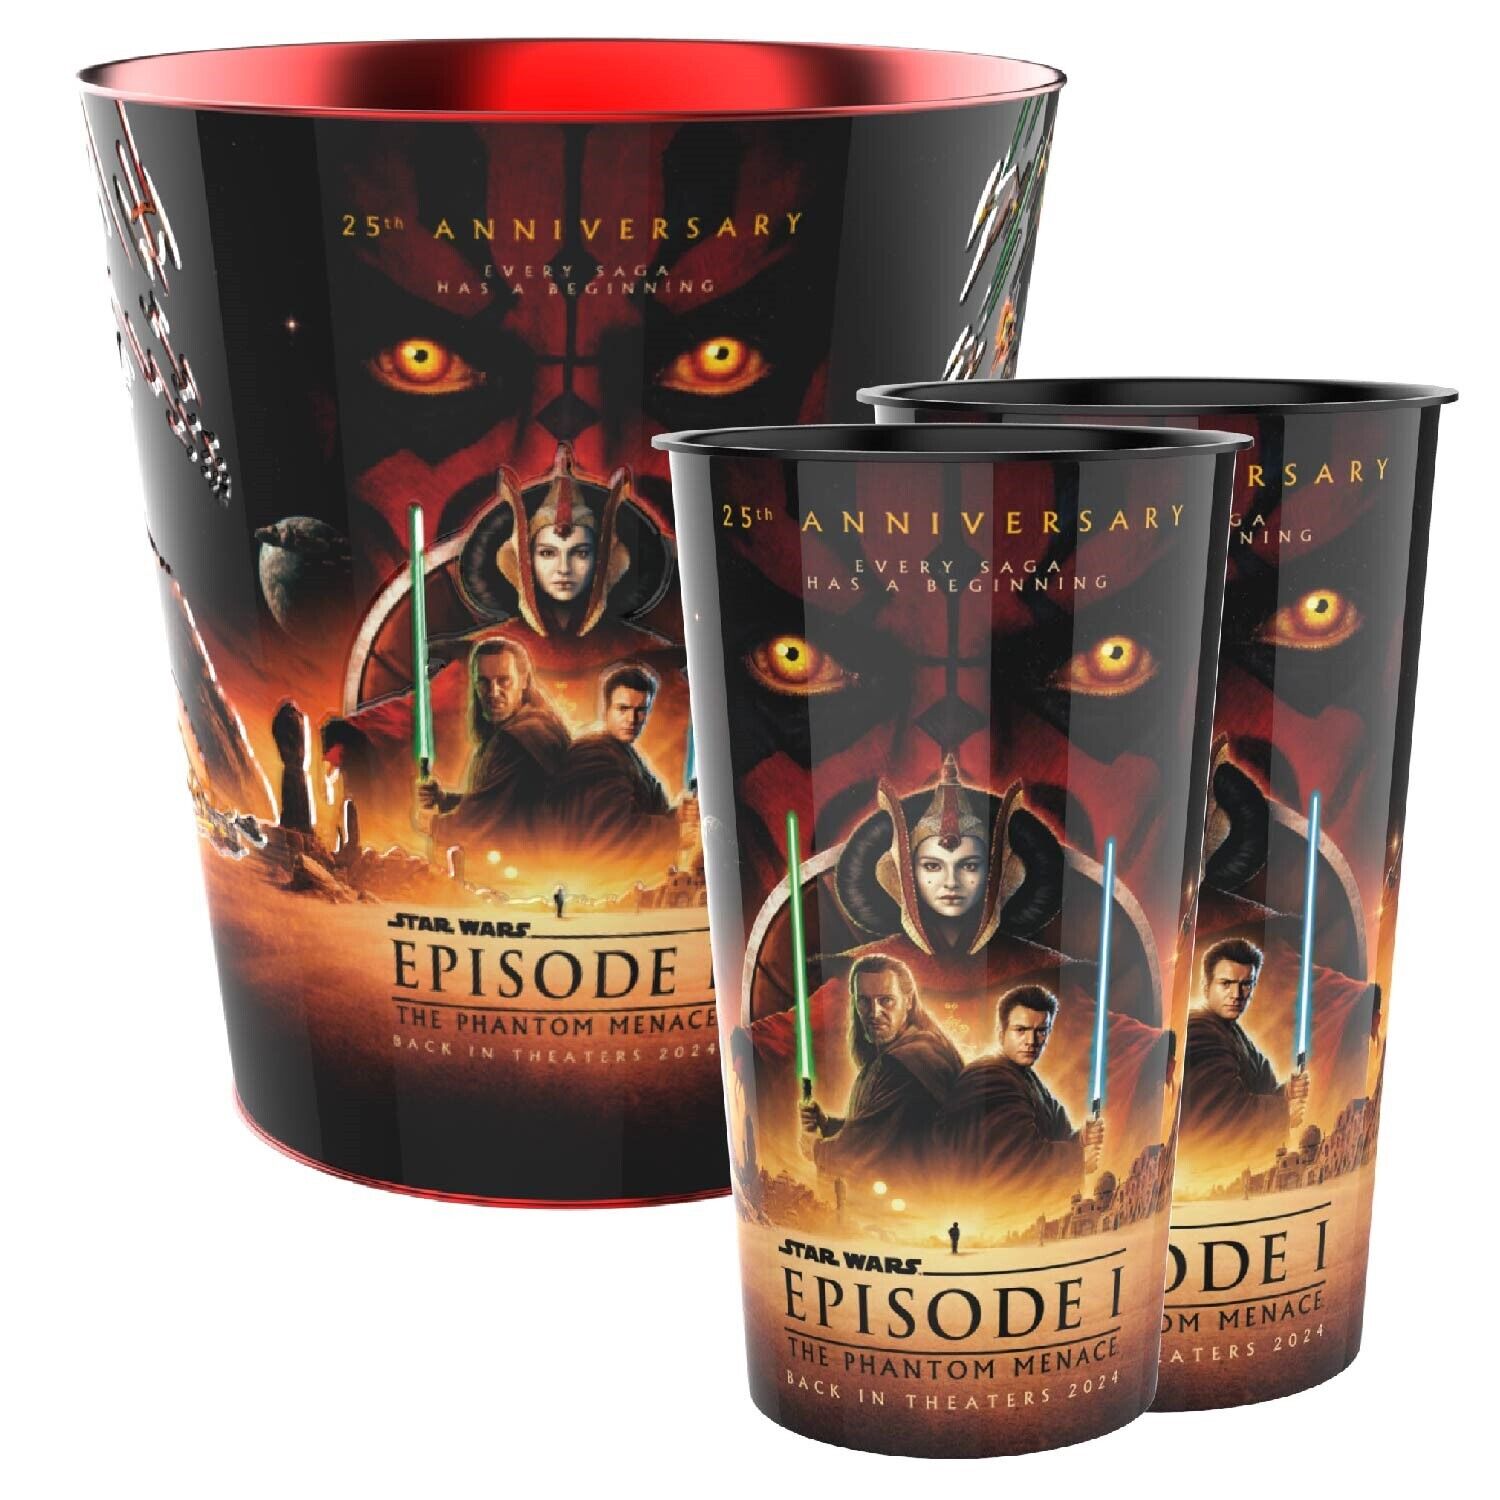 Star Wars 25th Anniversary Popcorn Bucket & Cup Set. Limited Edition